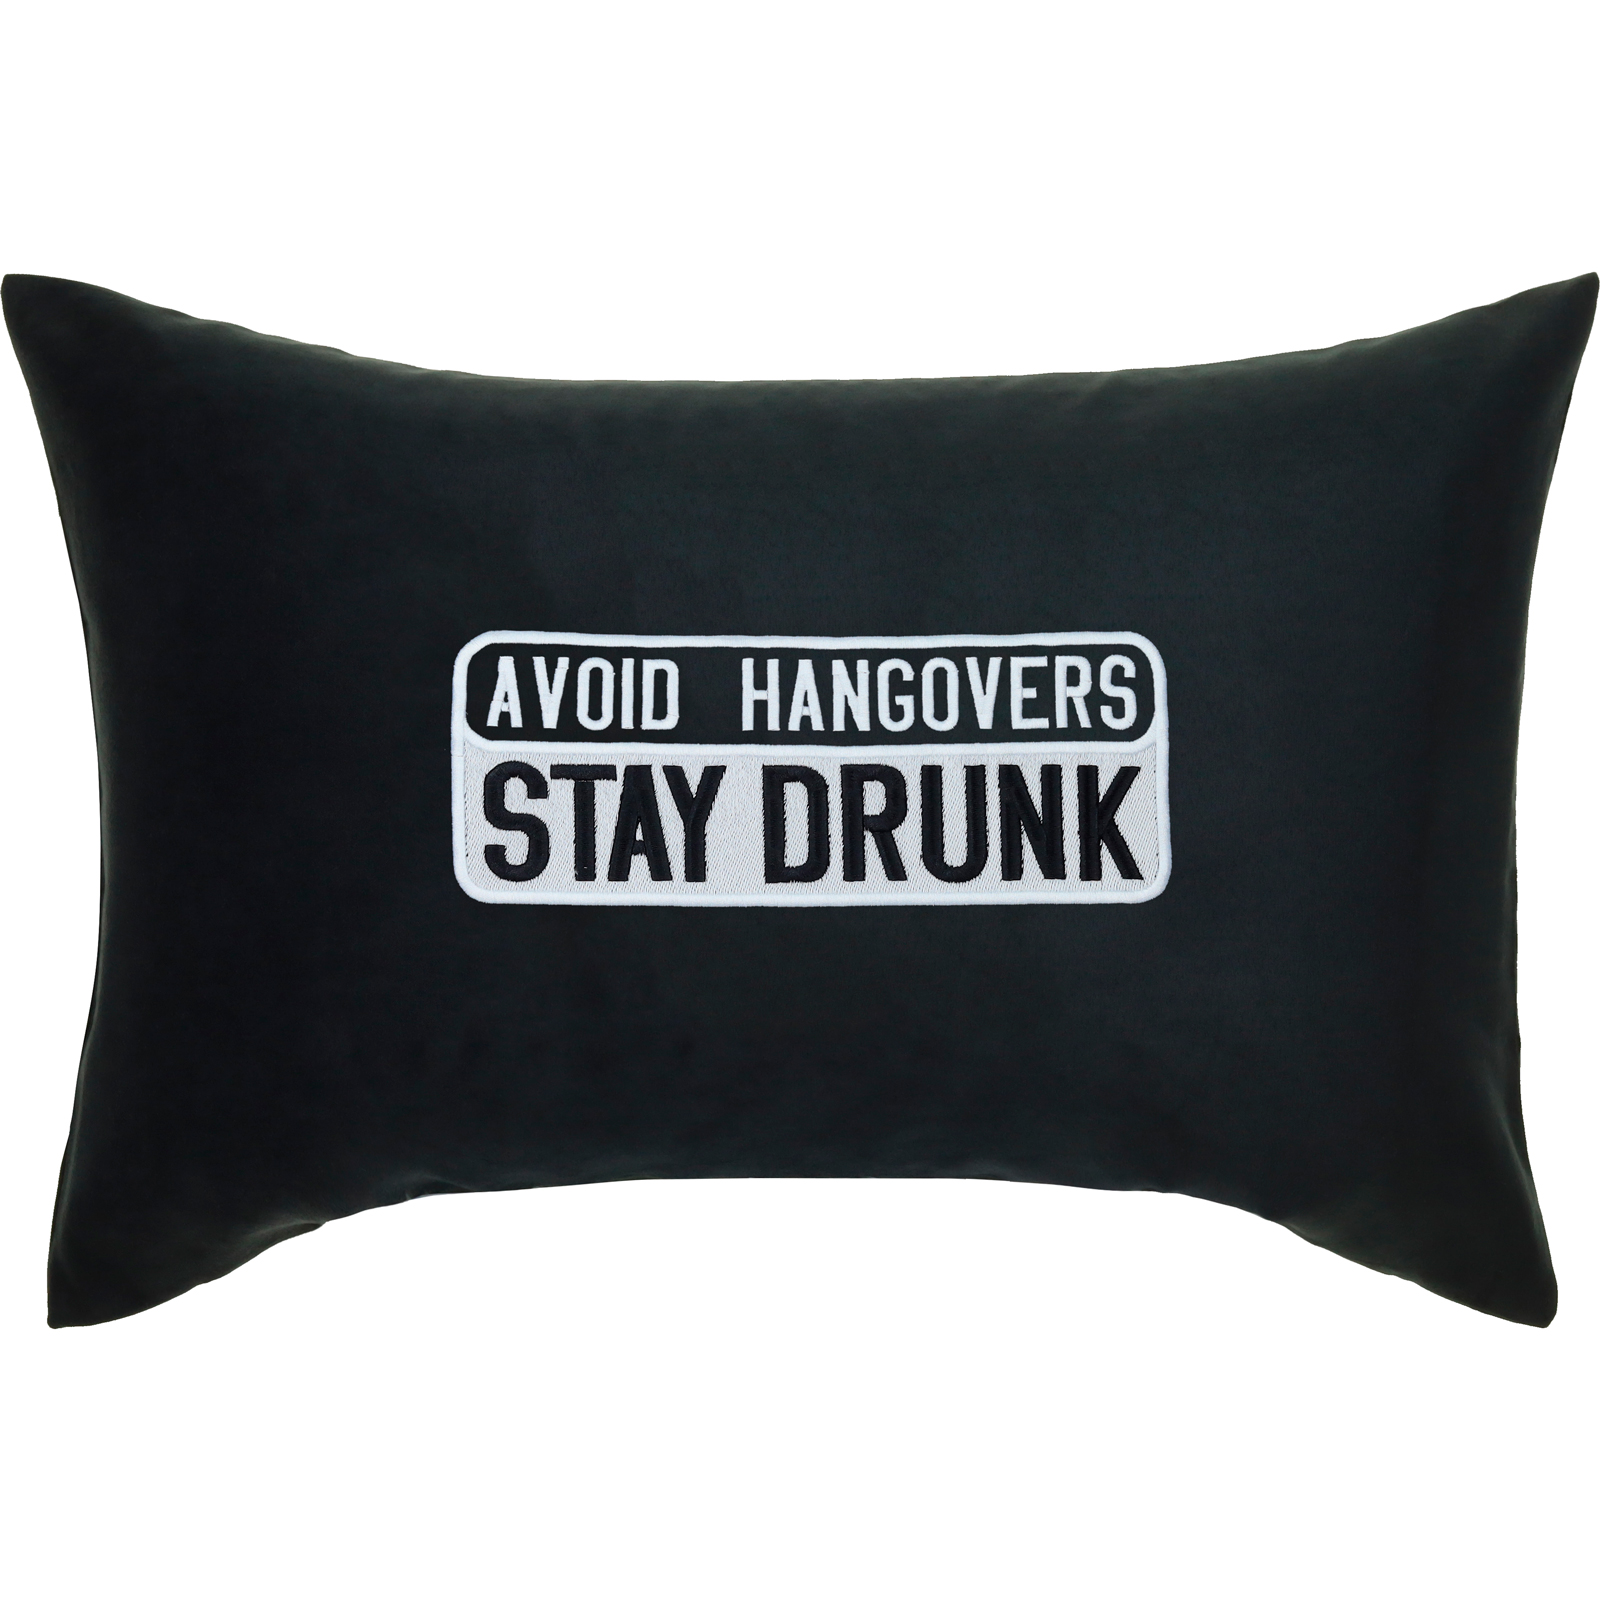 Avoid hangovers - Stay drunk - Kissen